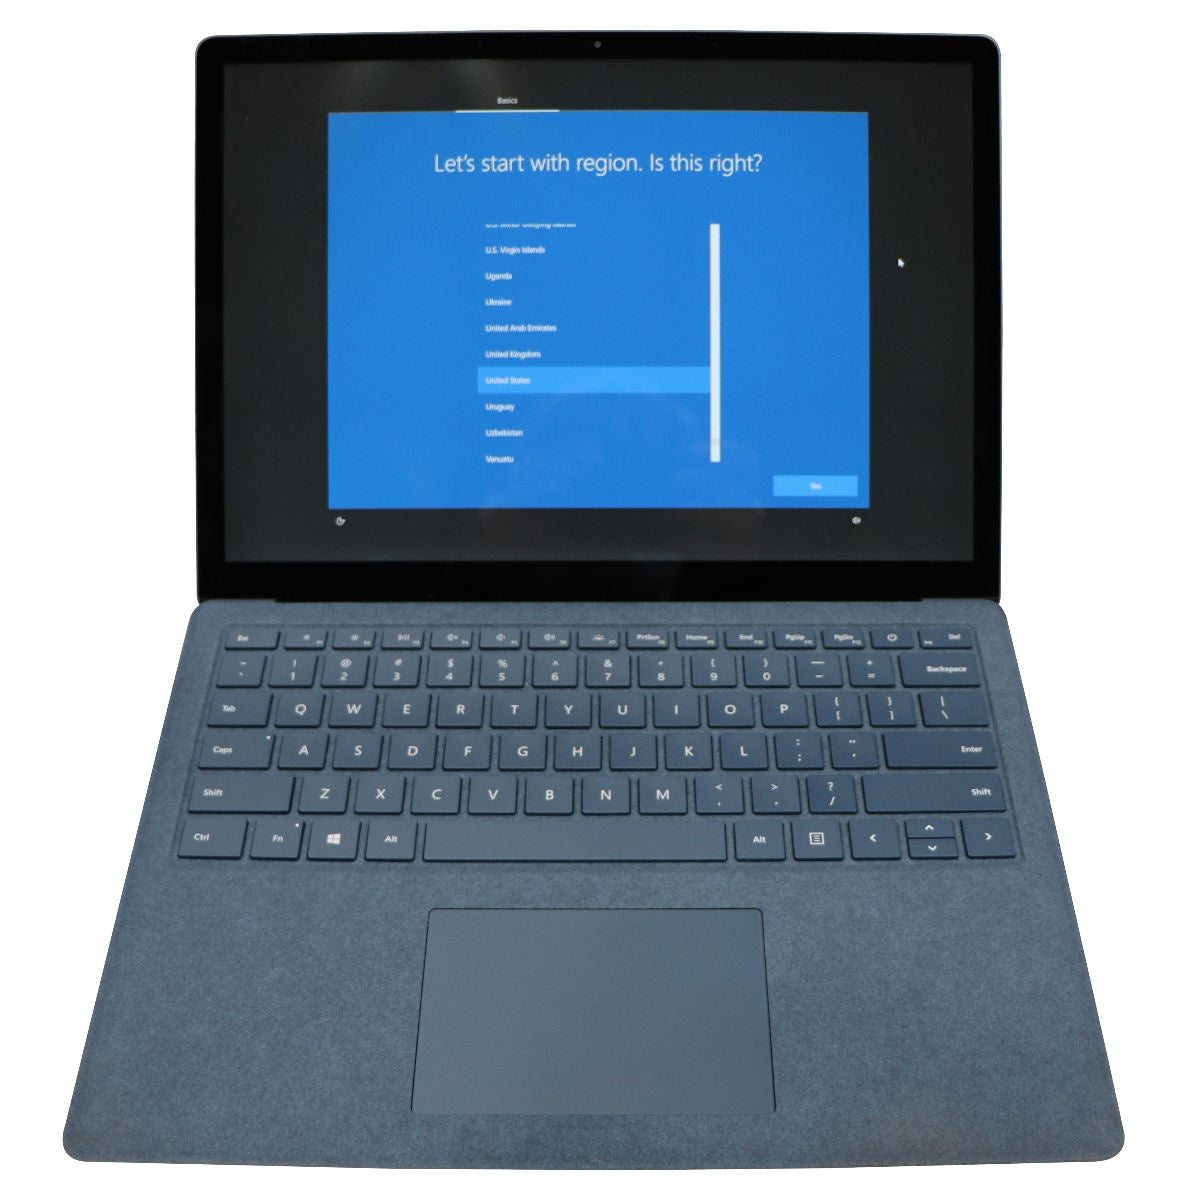 Microsoft Surface Laptop (13.5) - i5-7200U/Intel 620 256GB/8GB 1769 Cobalt Blue Laptops - PC Laptops & Netbooks Microsoft    - Simple Cell Bulk Wholesale Pricing - USA Seller